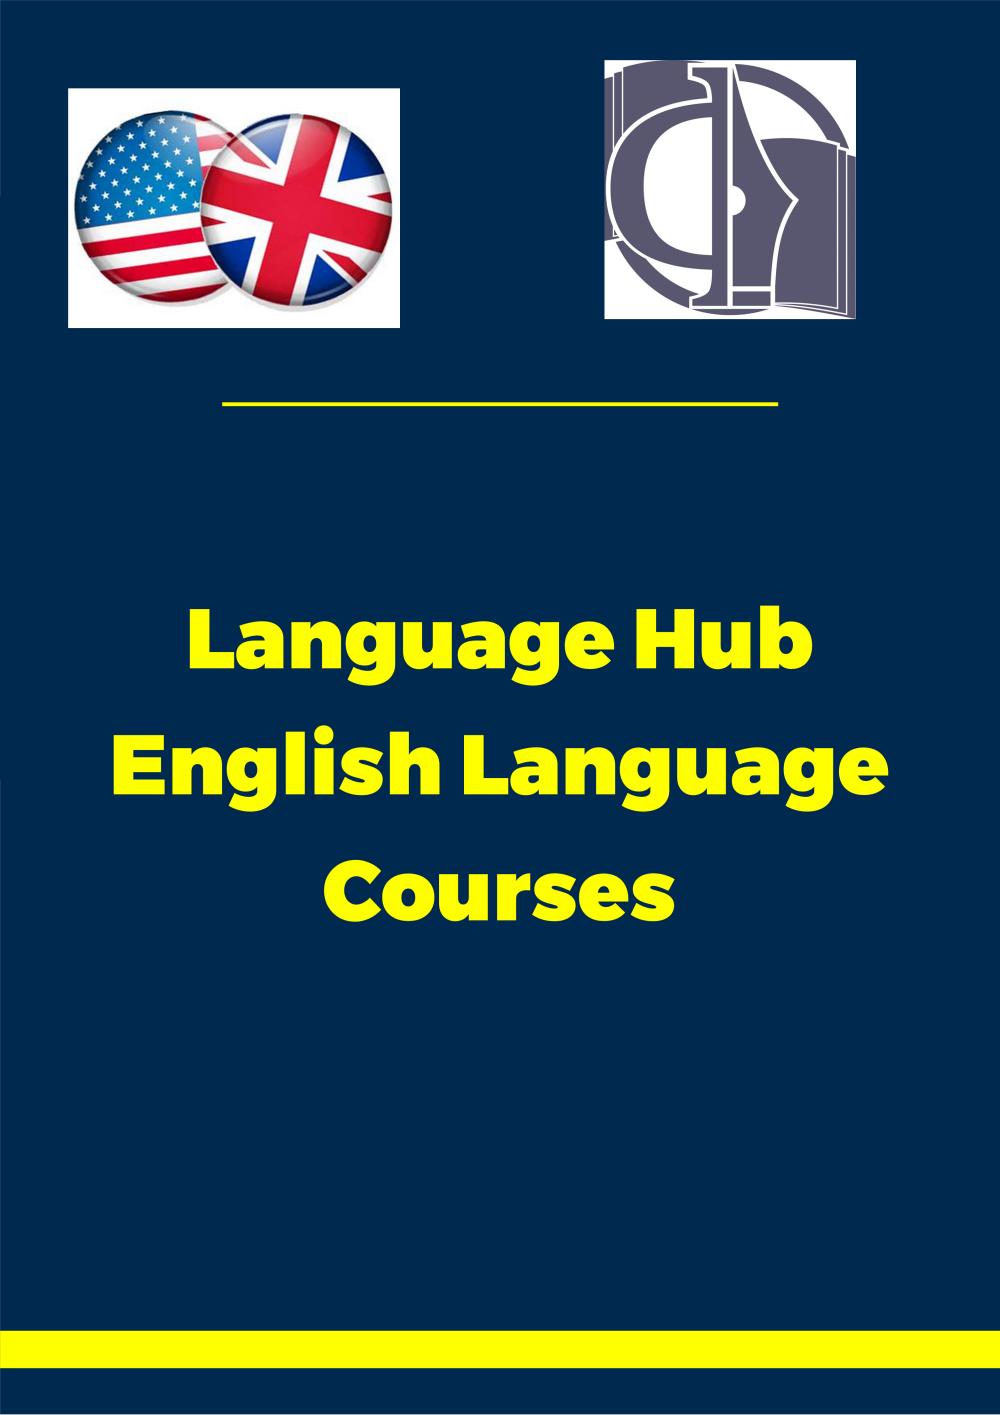 English language course "Language Hub"